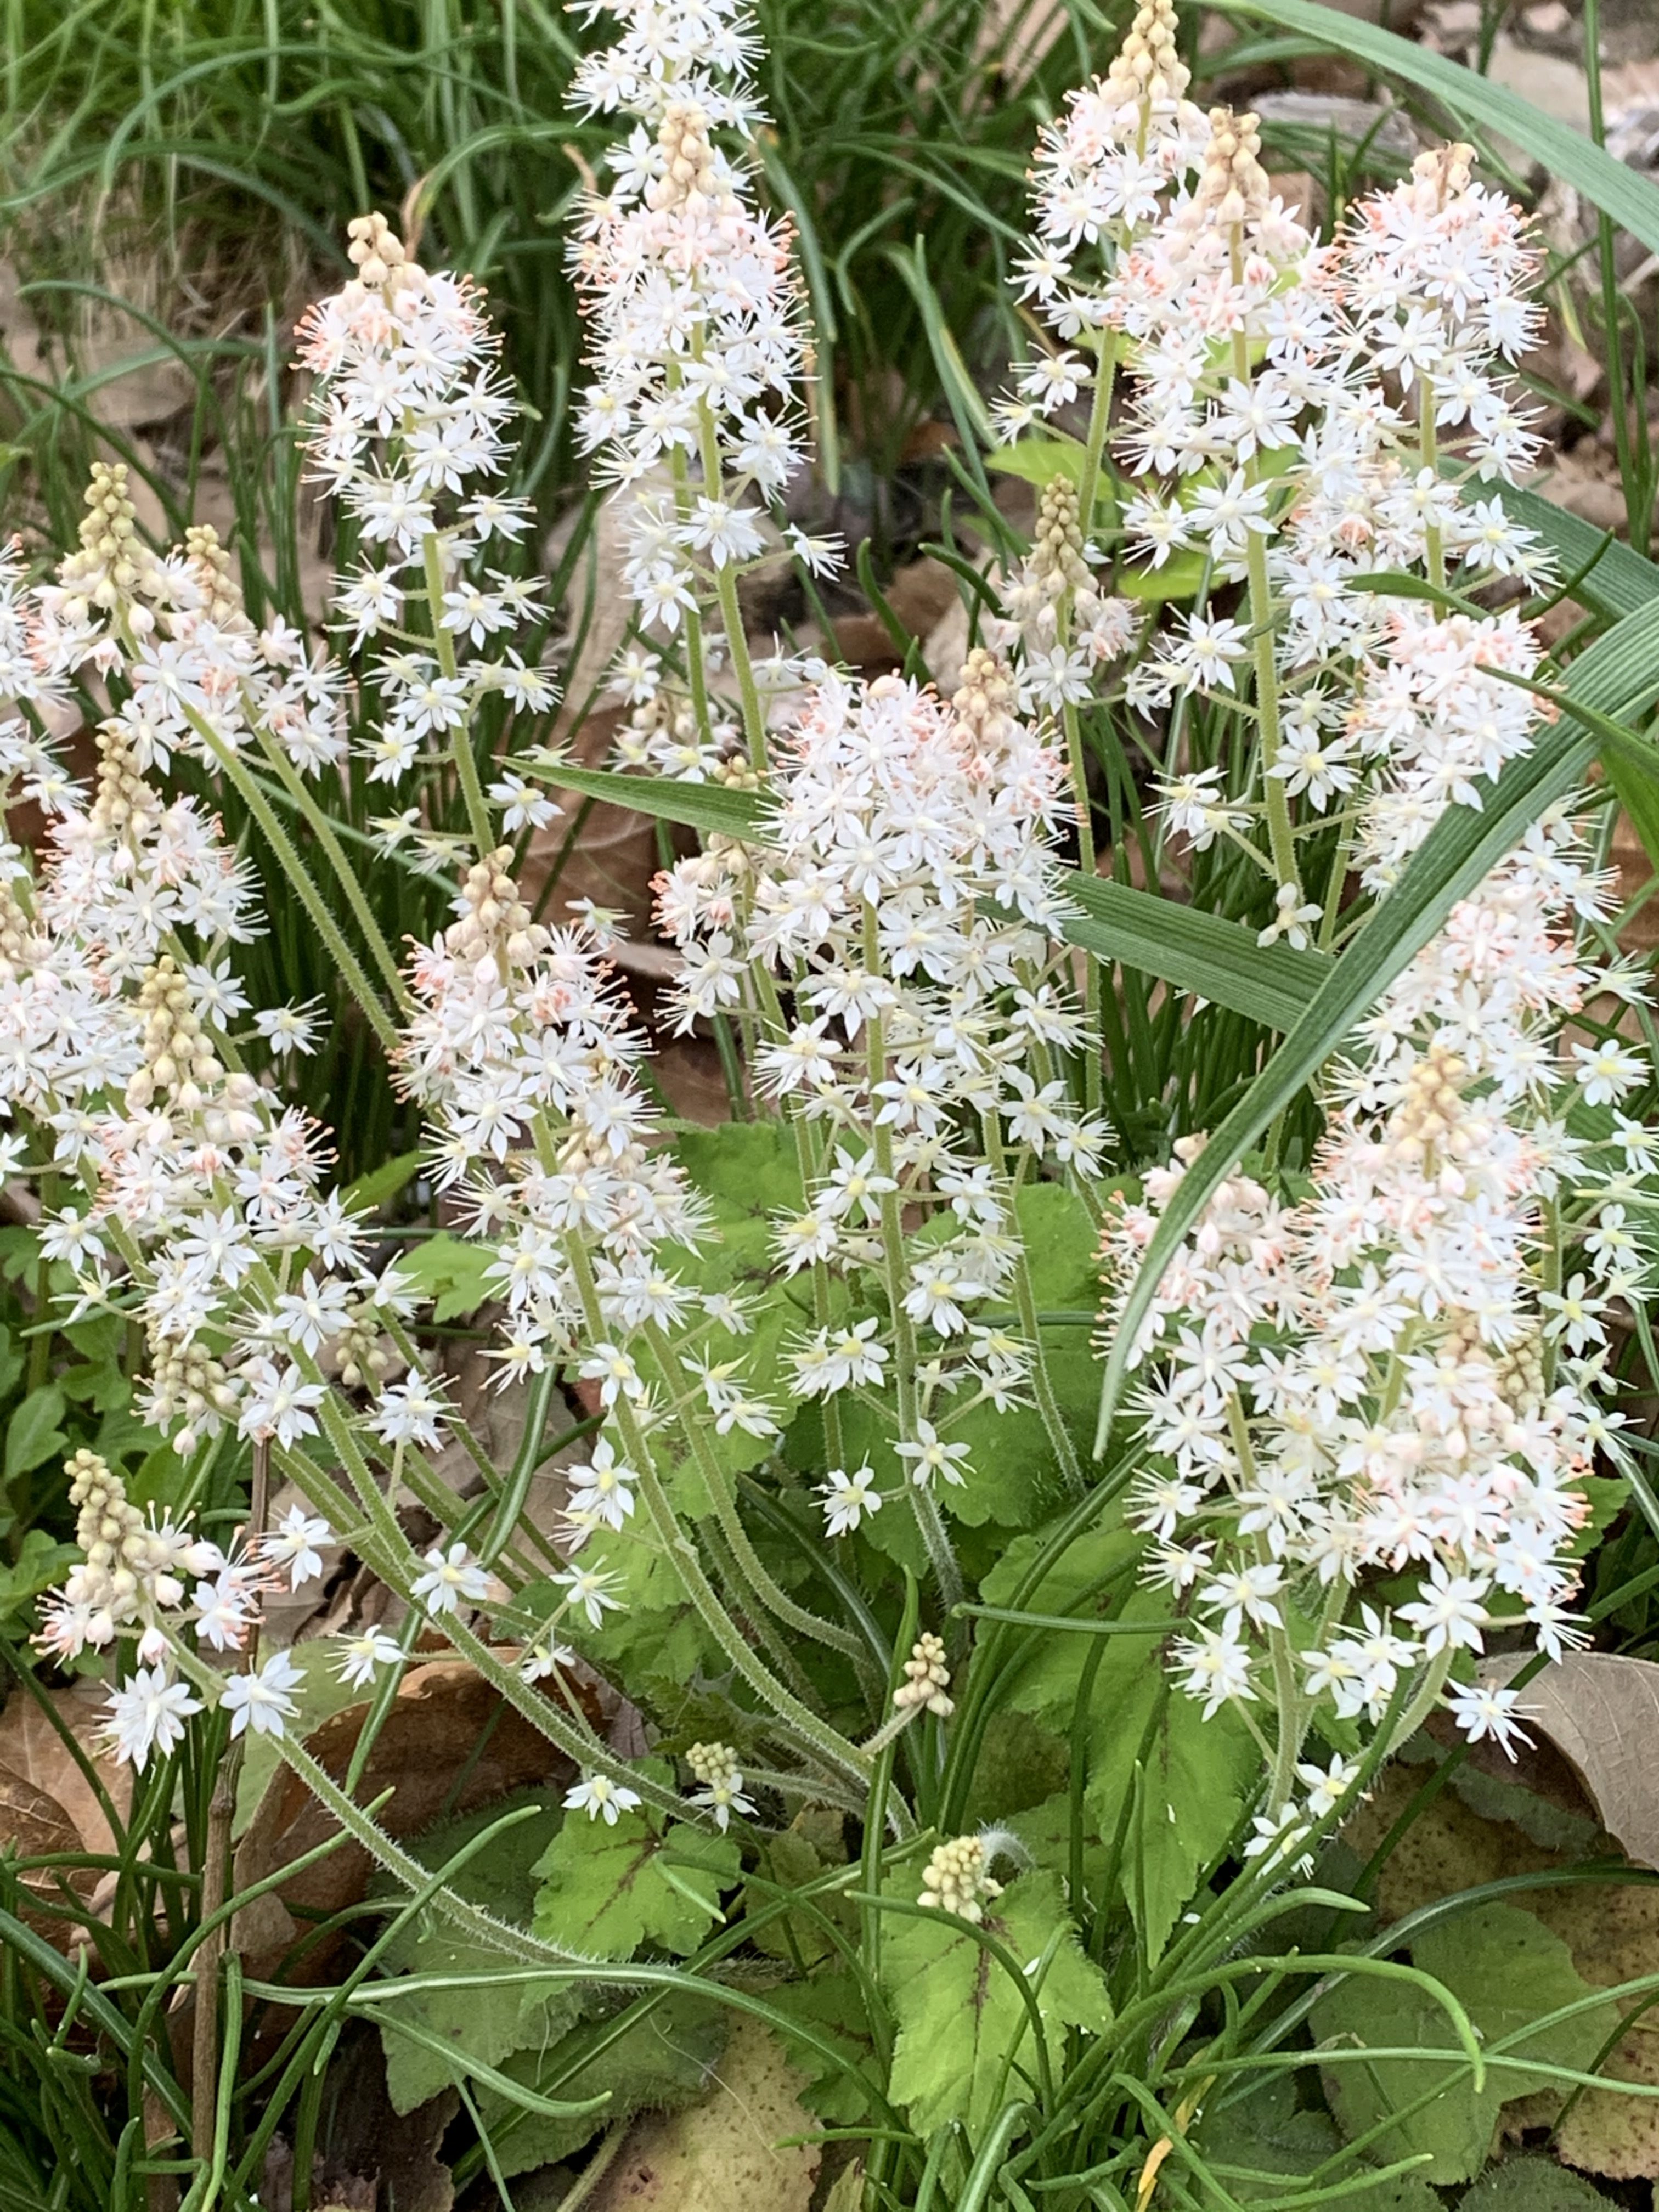 Foamflower or Tiarella Cordifolia